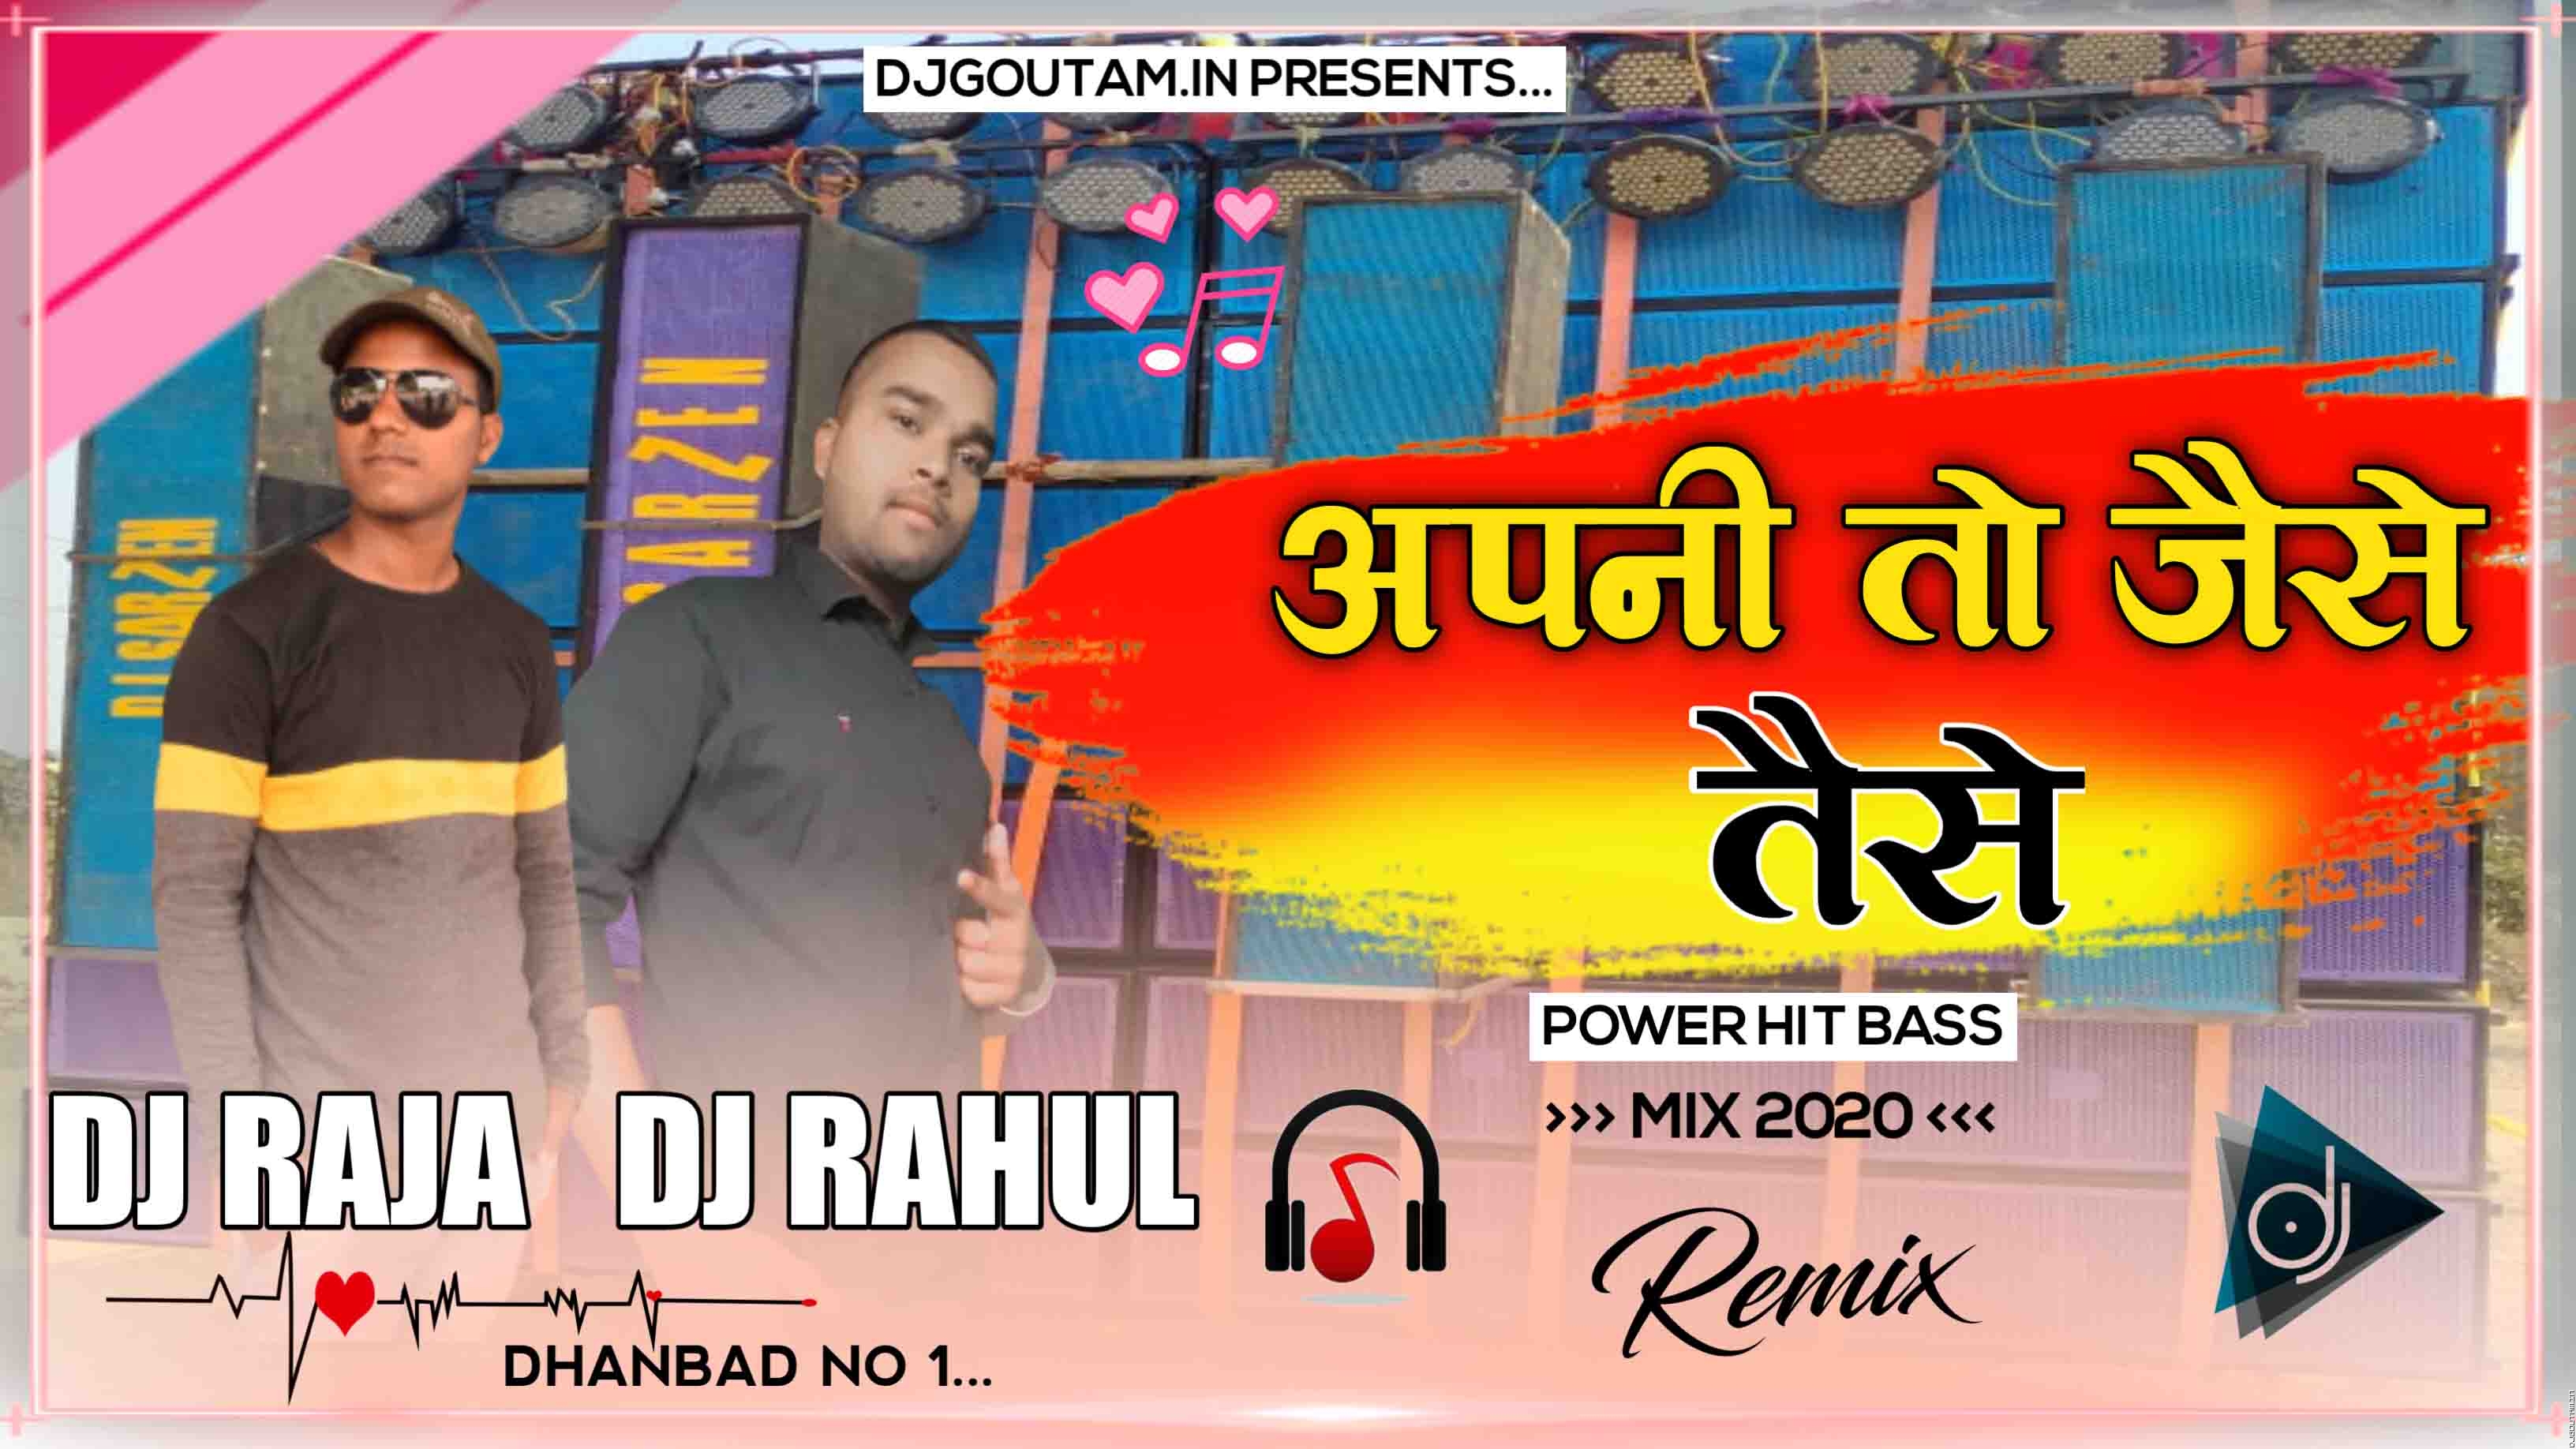 Apni To JaiseTaise [Double Hard Power Bass Mix] Dj Raja Dhanbad & Dj RaHul Dhanbad.mp3